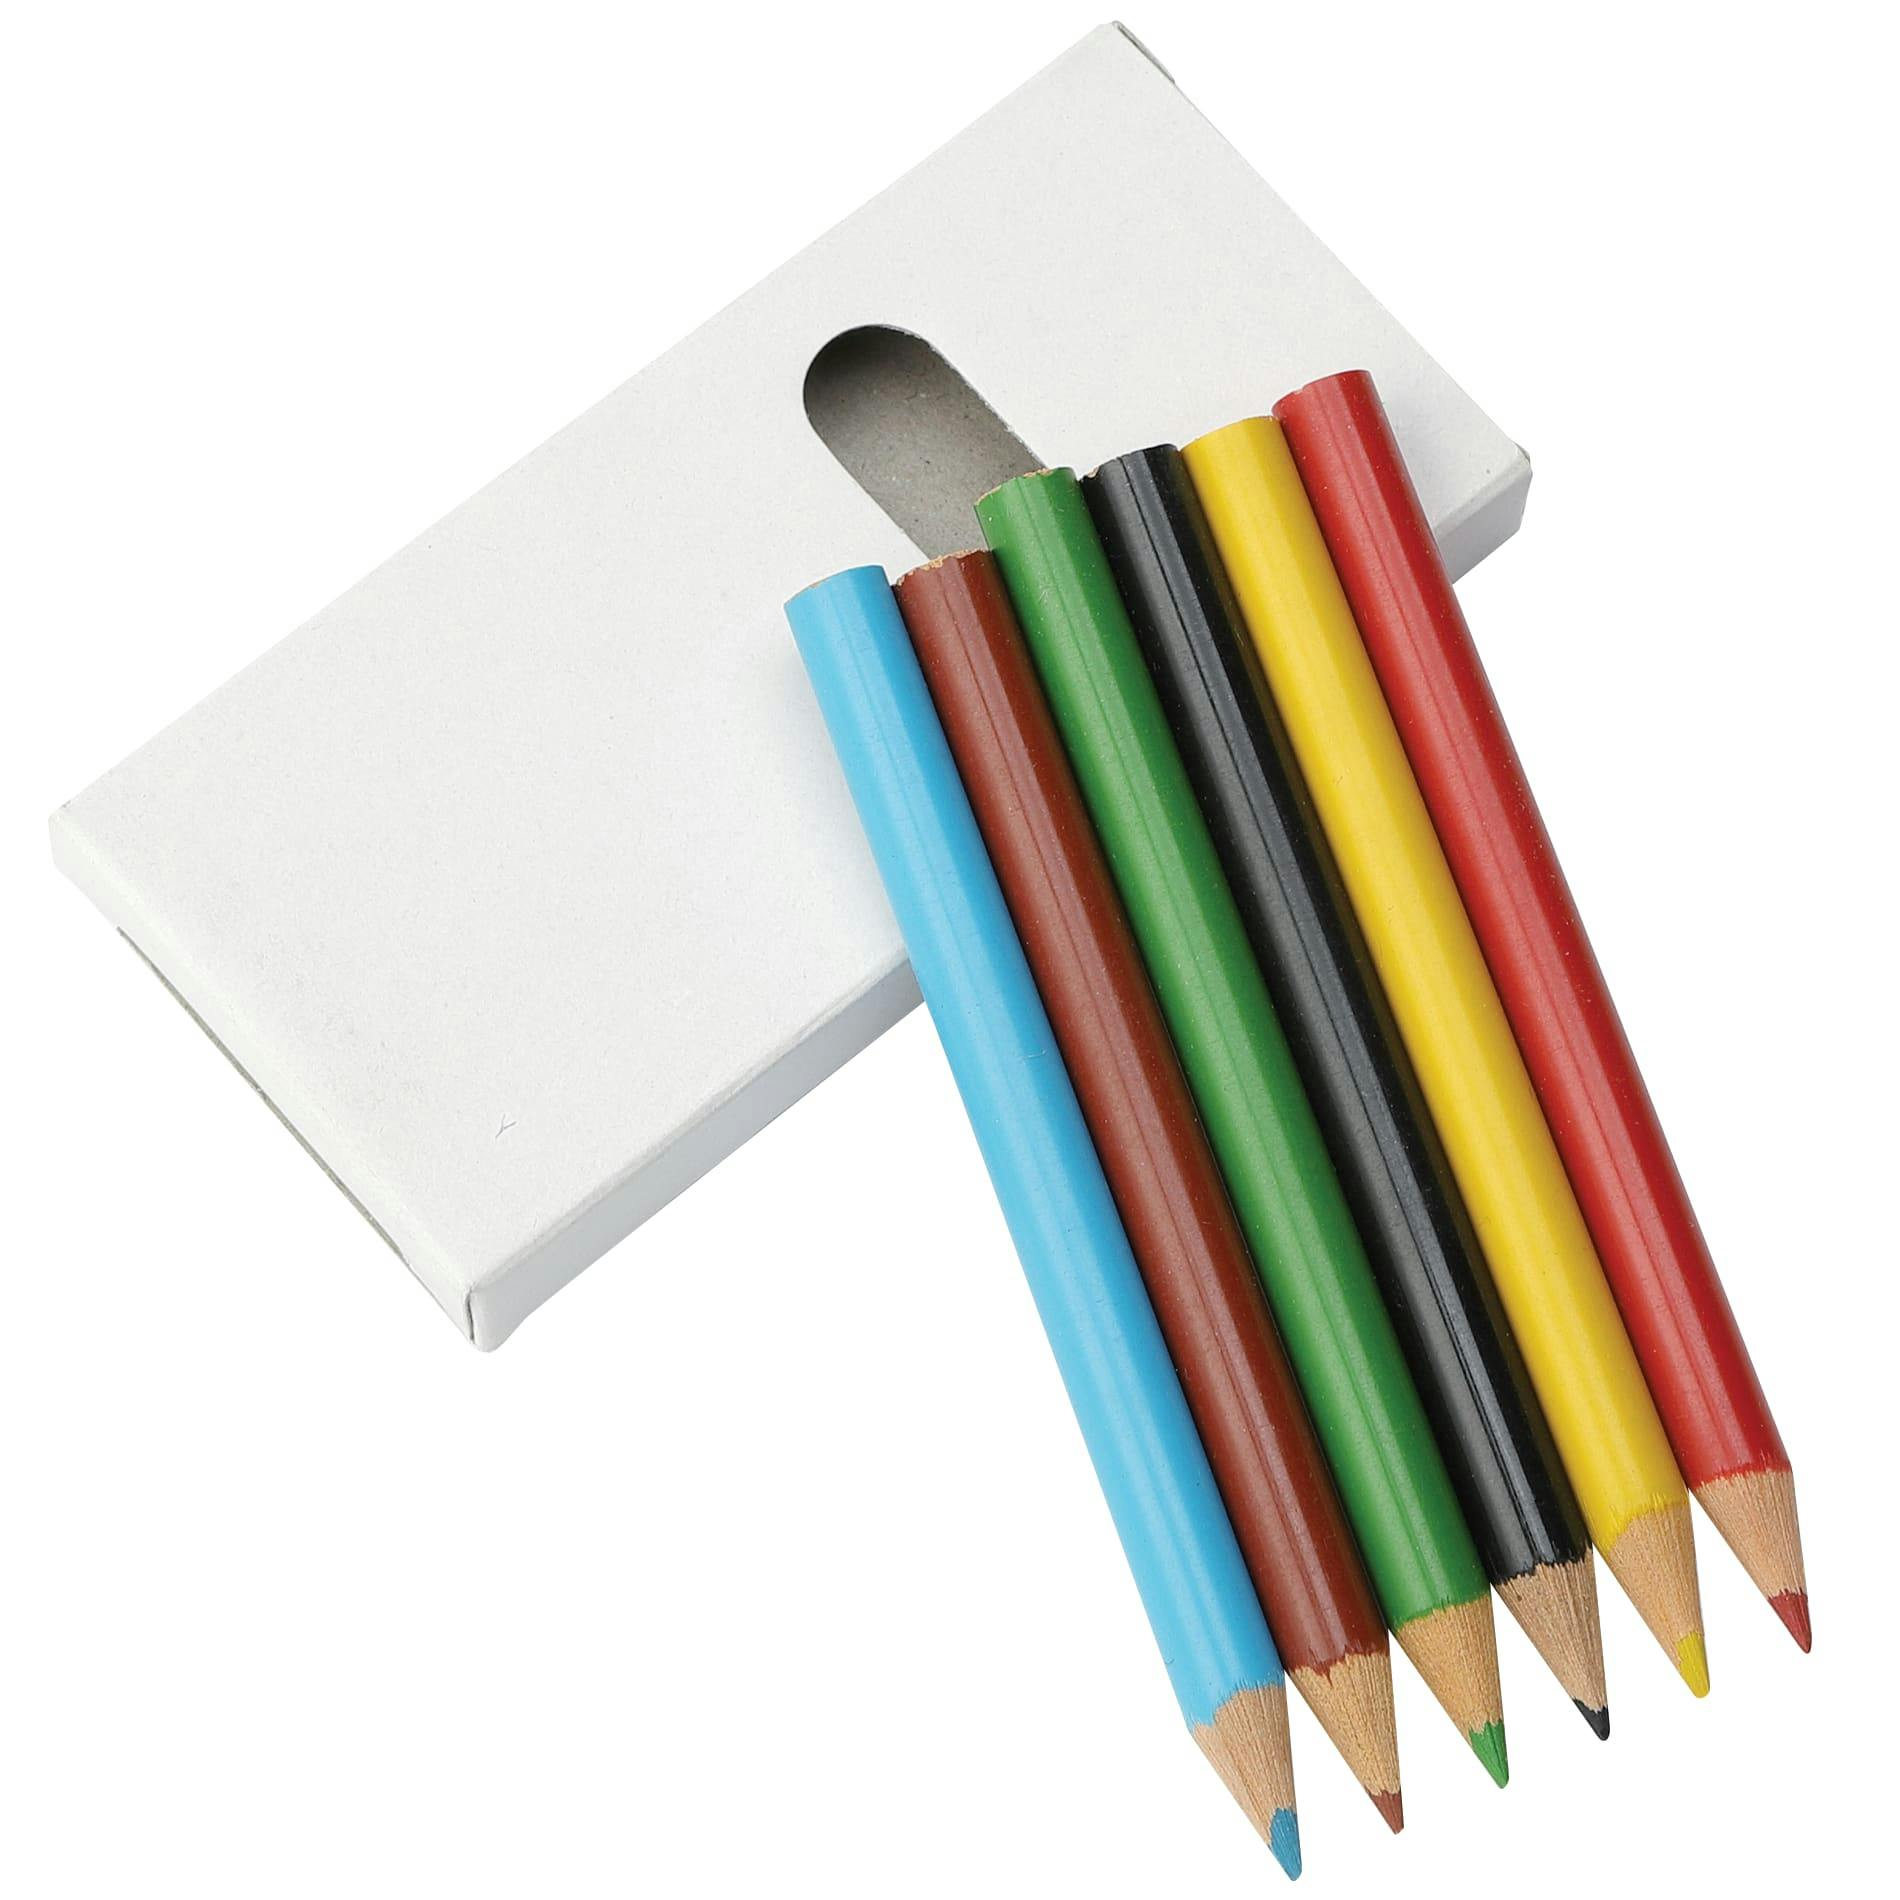 Sketchi 6-Piece Colored Pencil Set - additional Image 1